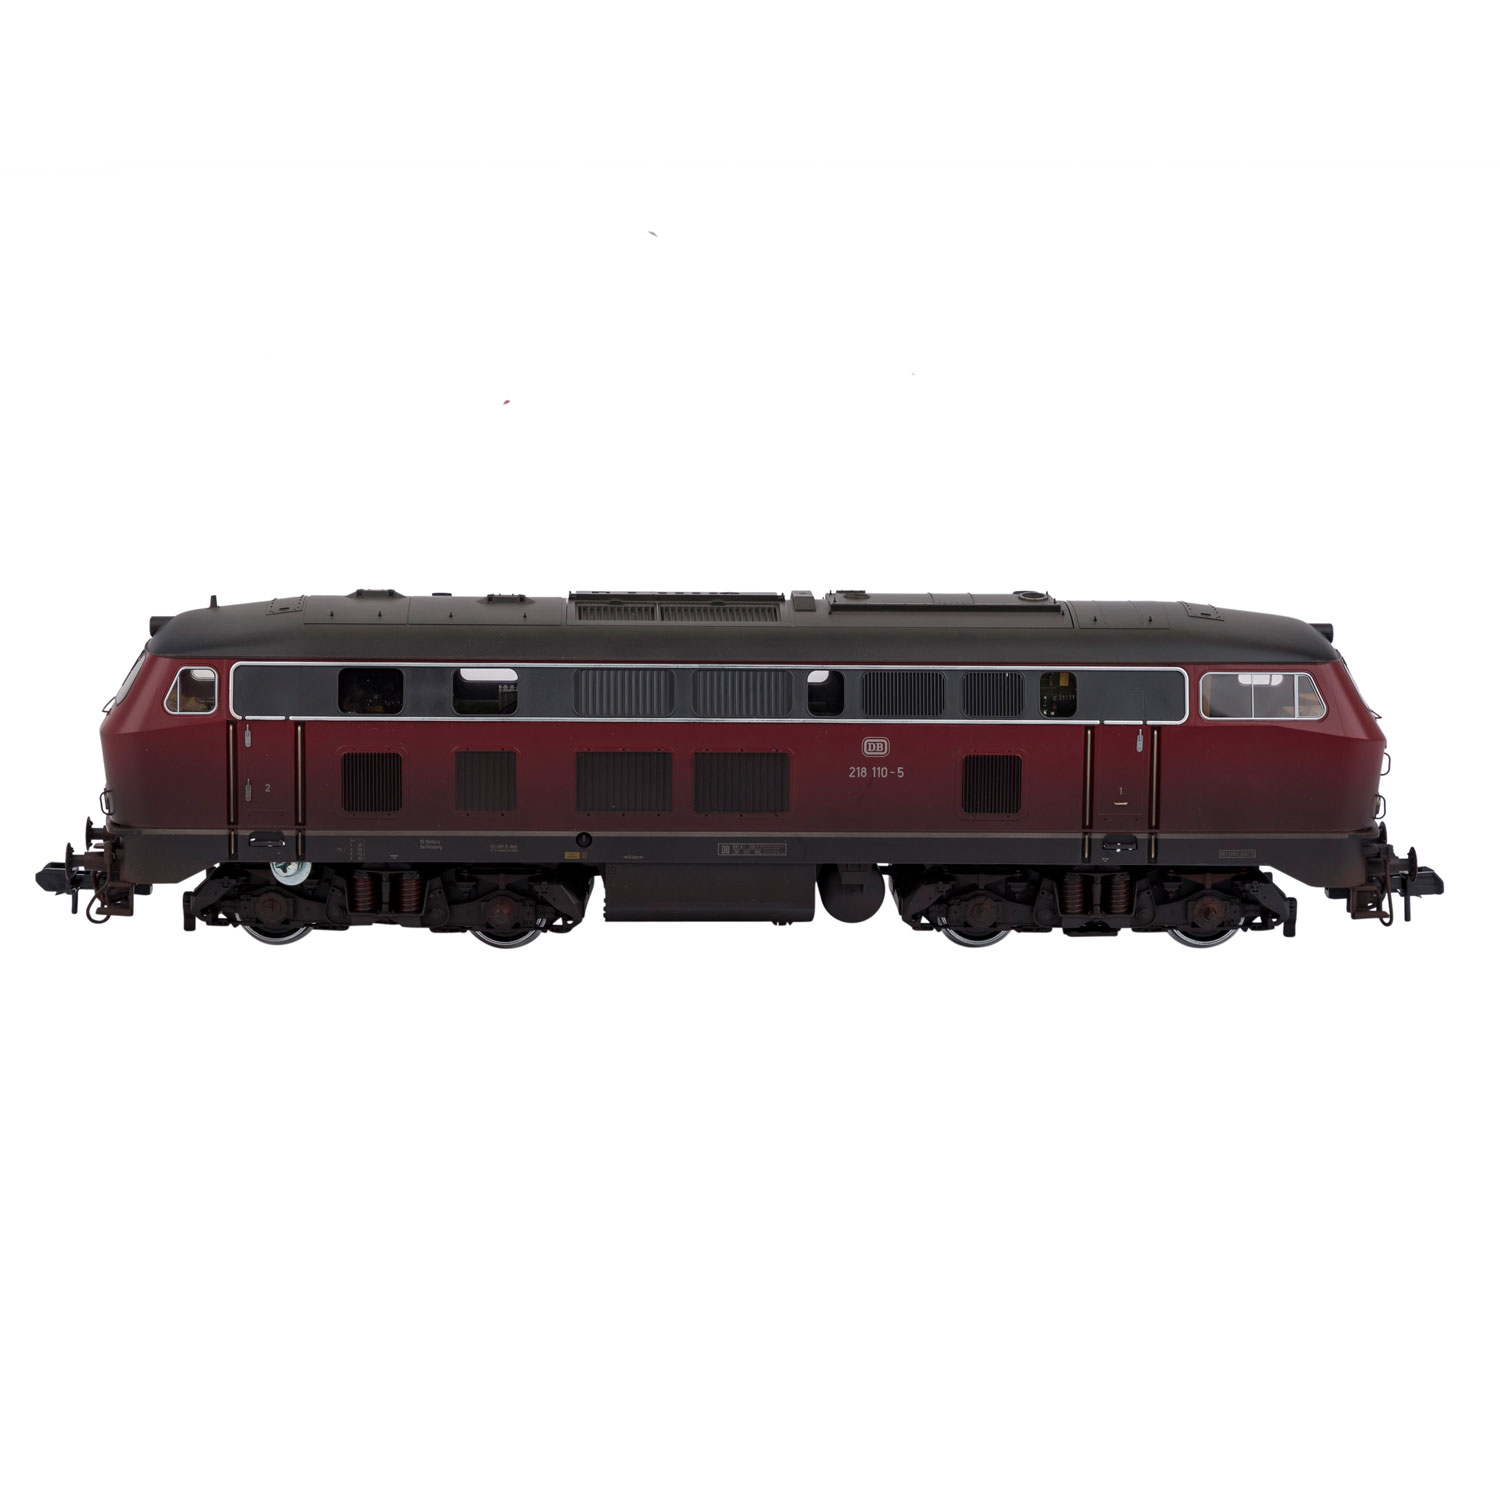 MÄRKLIN Diesellok 85571, Spur 1,Kunststoff-Gehäuse, rot/grau patiniert, BR 218 der DB, BN 218 110-5. - Image 2 of 3